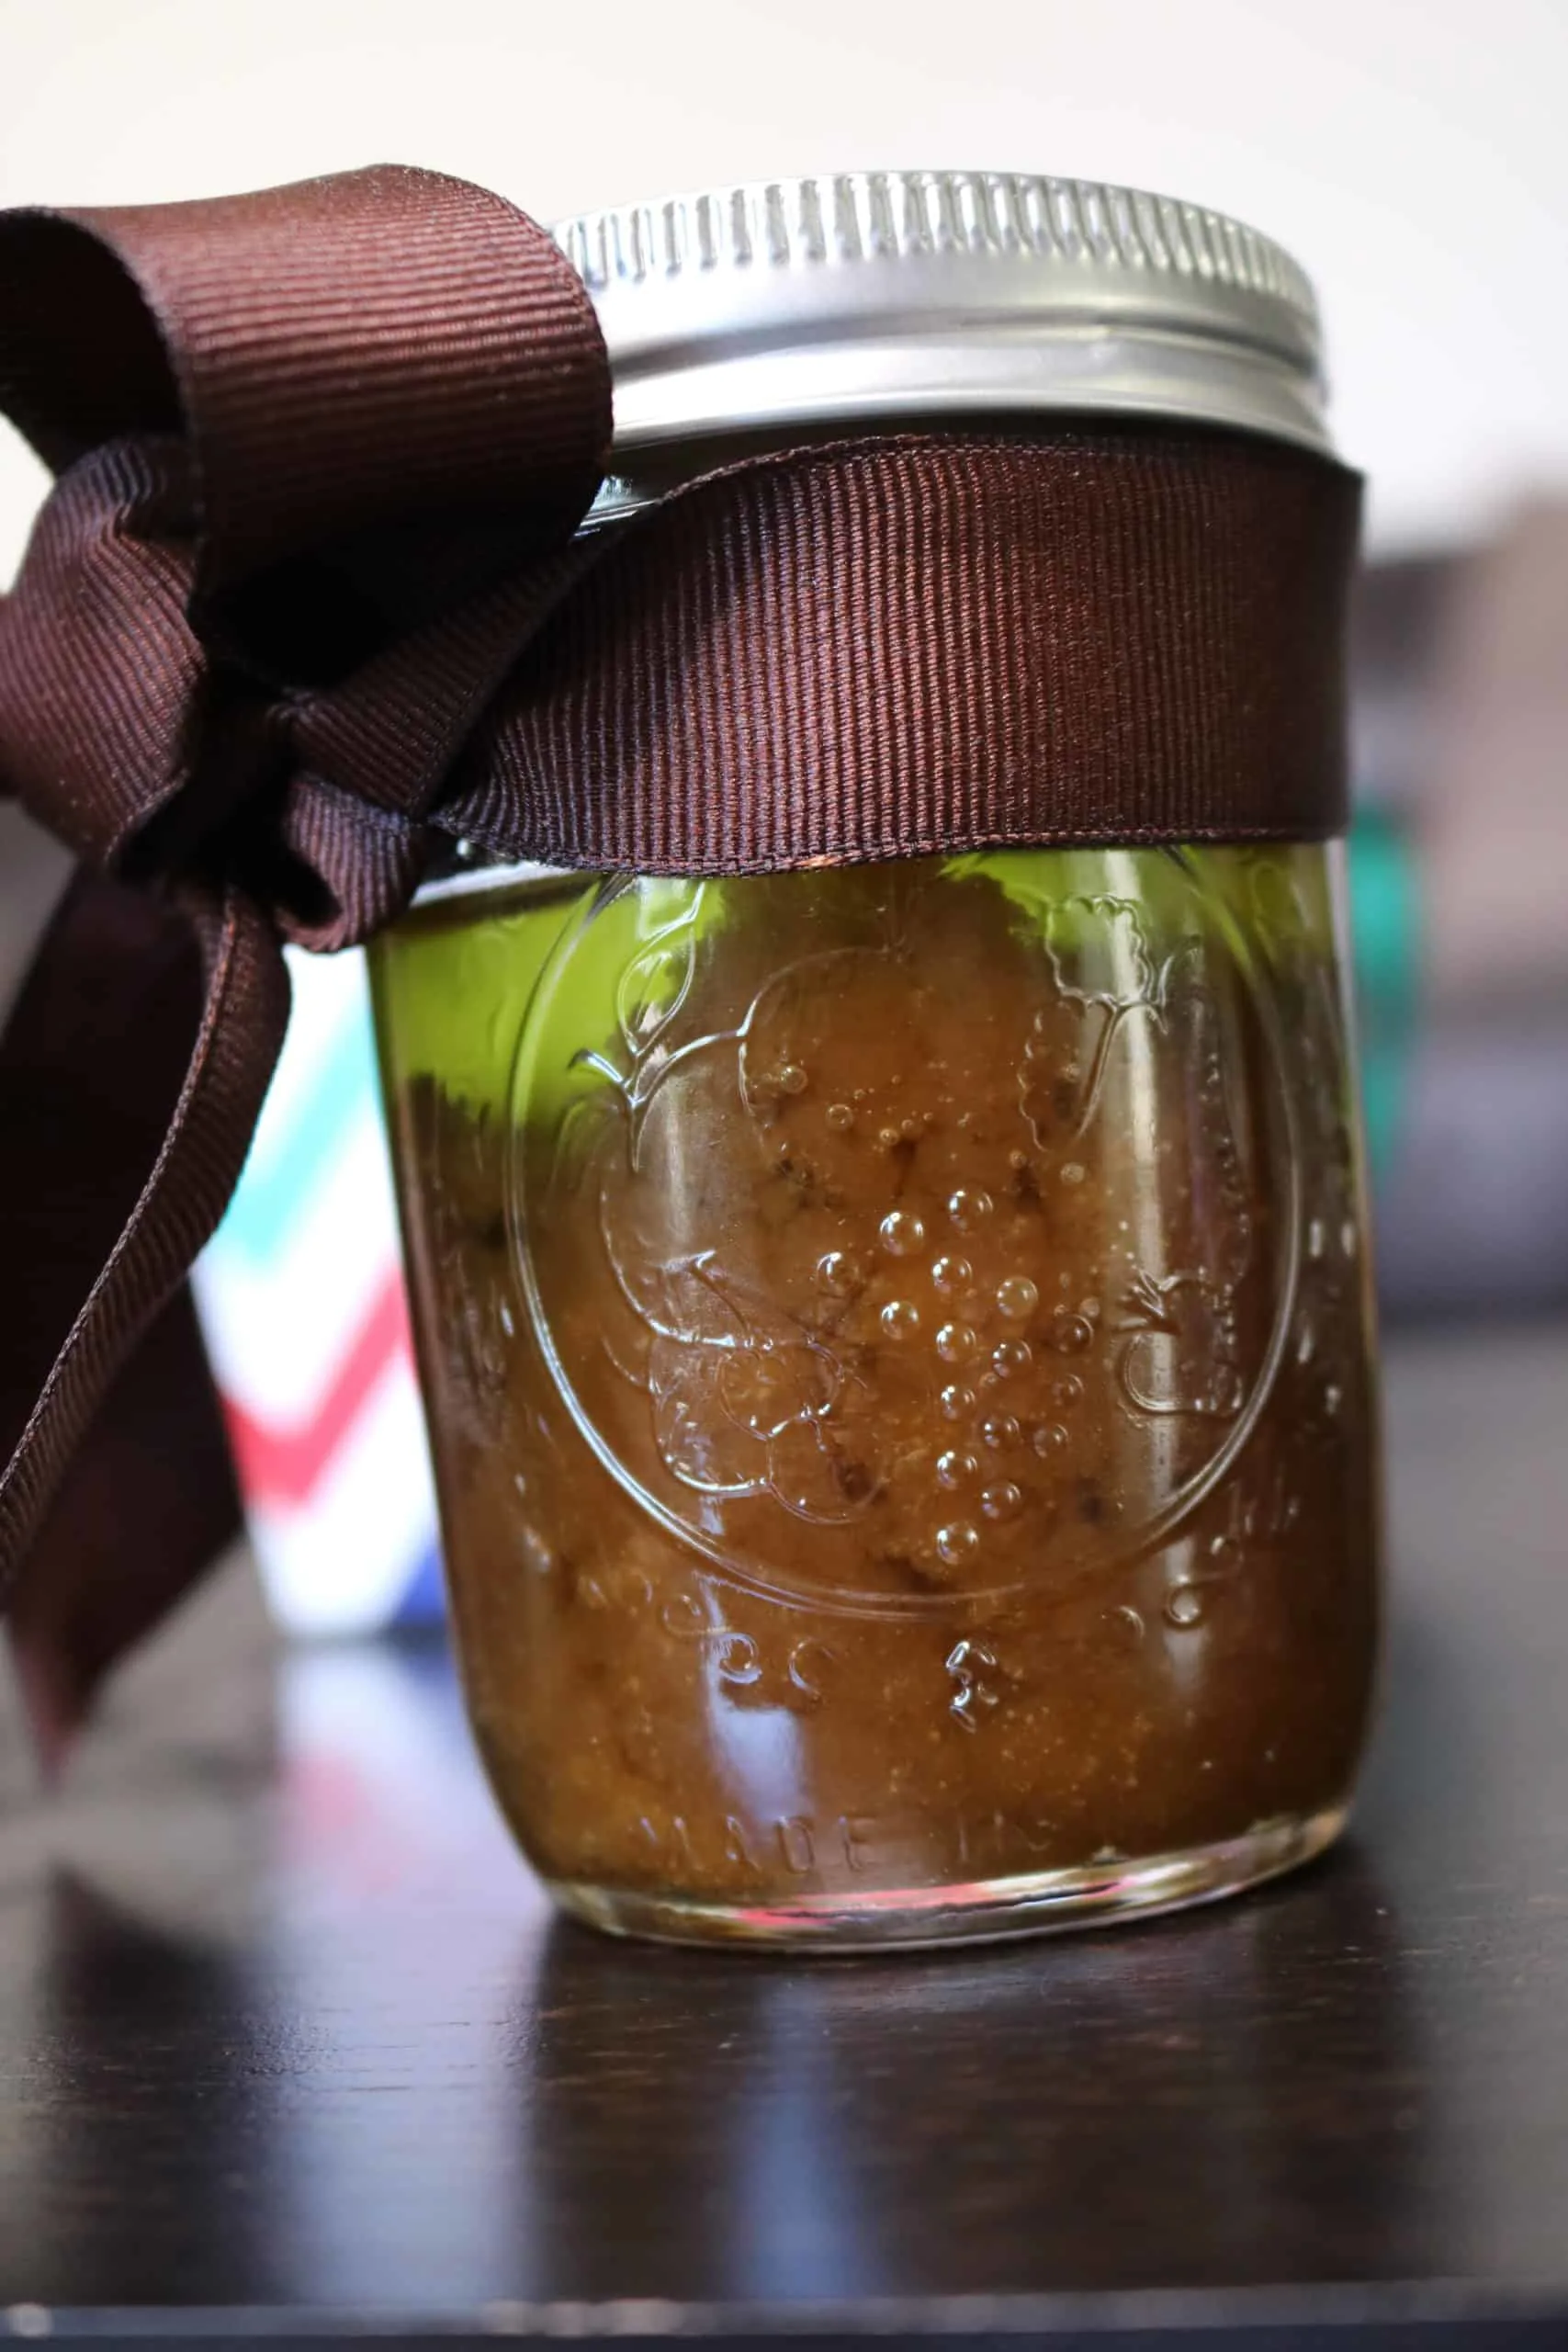 Brown sugar scrub in a gift jar with brown ribbon.